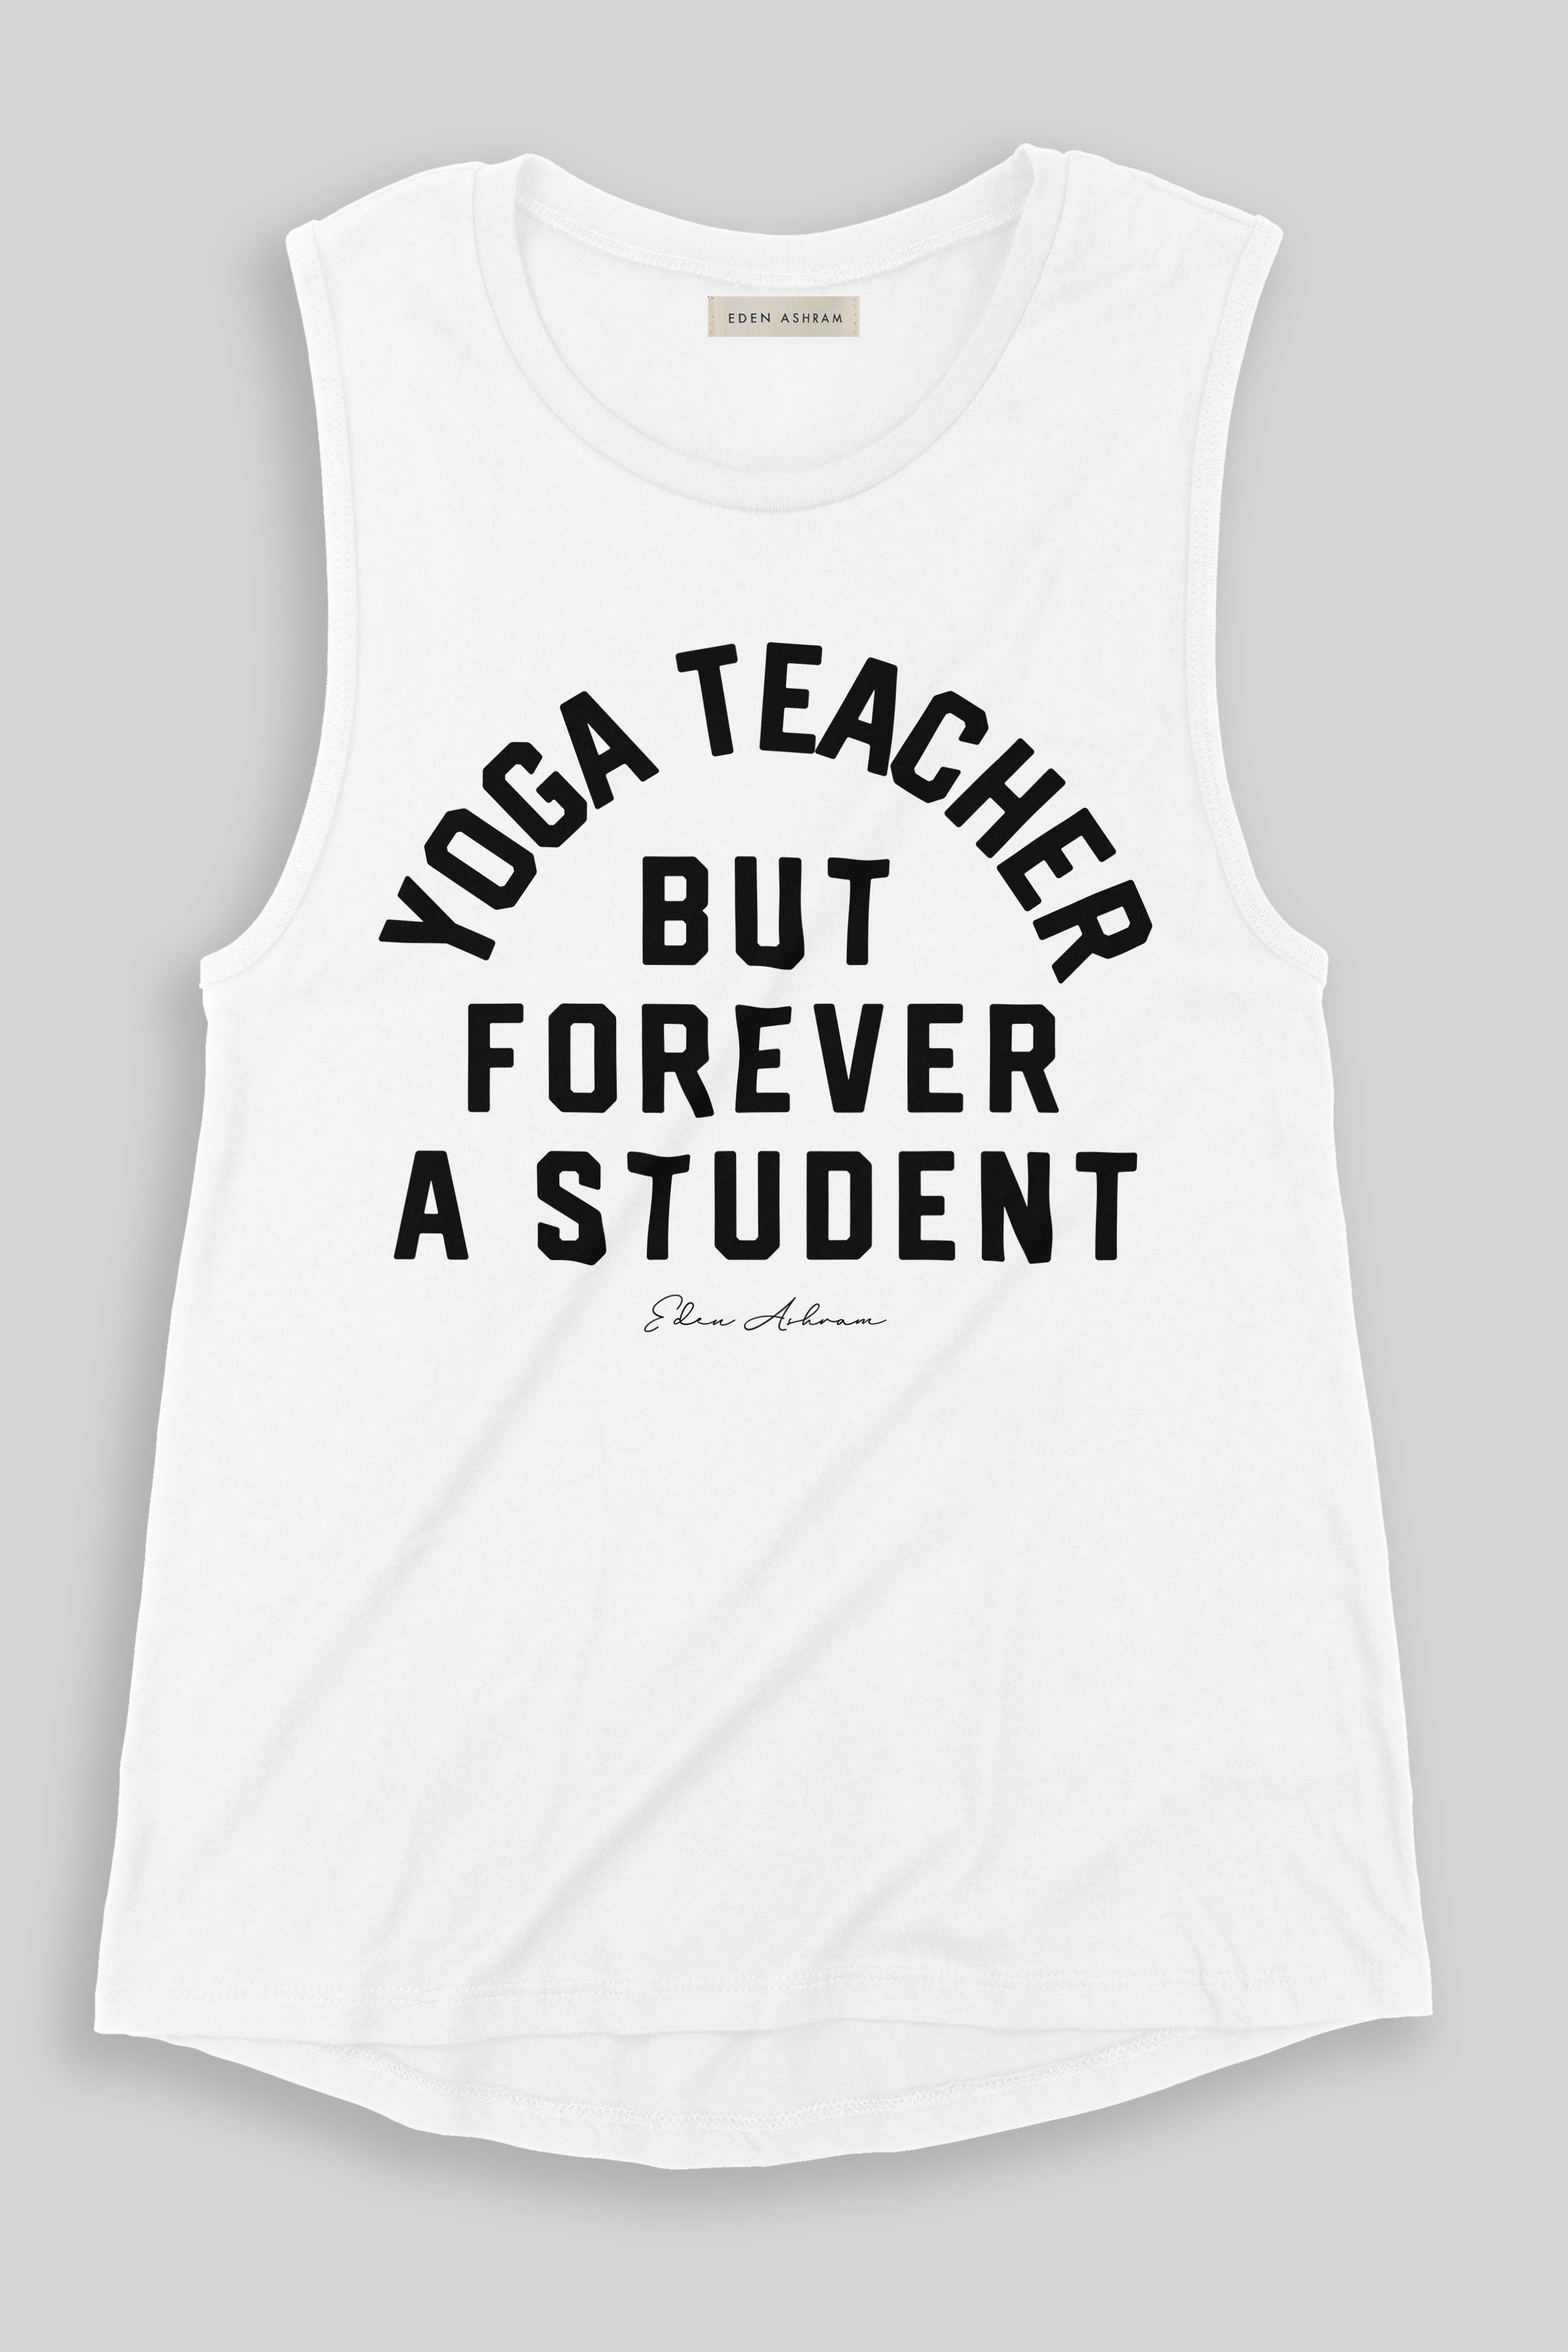 EDEN ASHRAM Yoga Teacher But Forever A Student Jersey Muscle Tank White